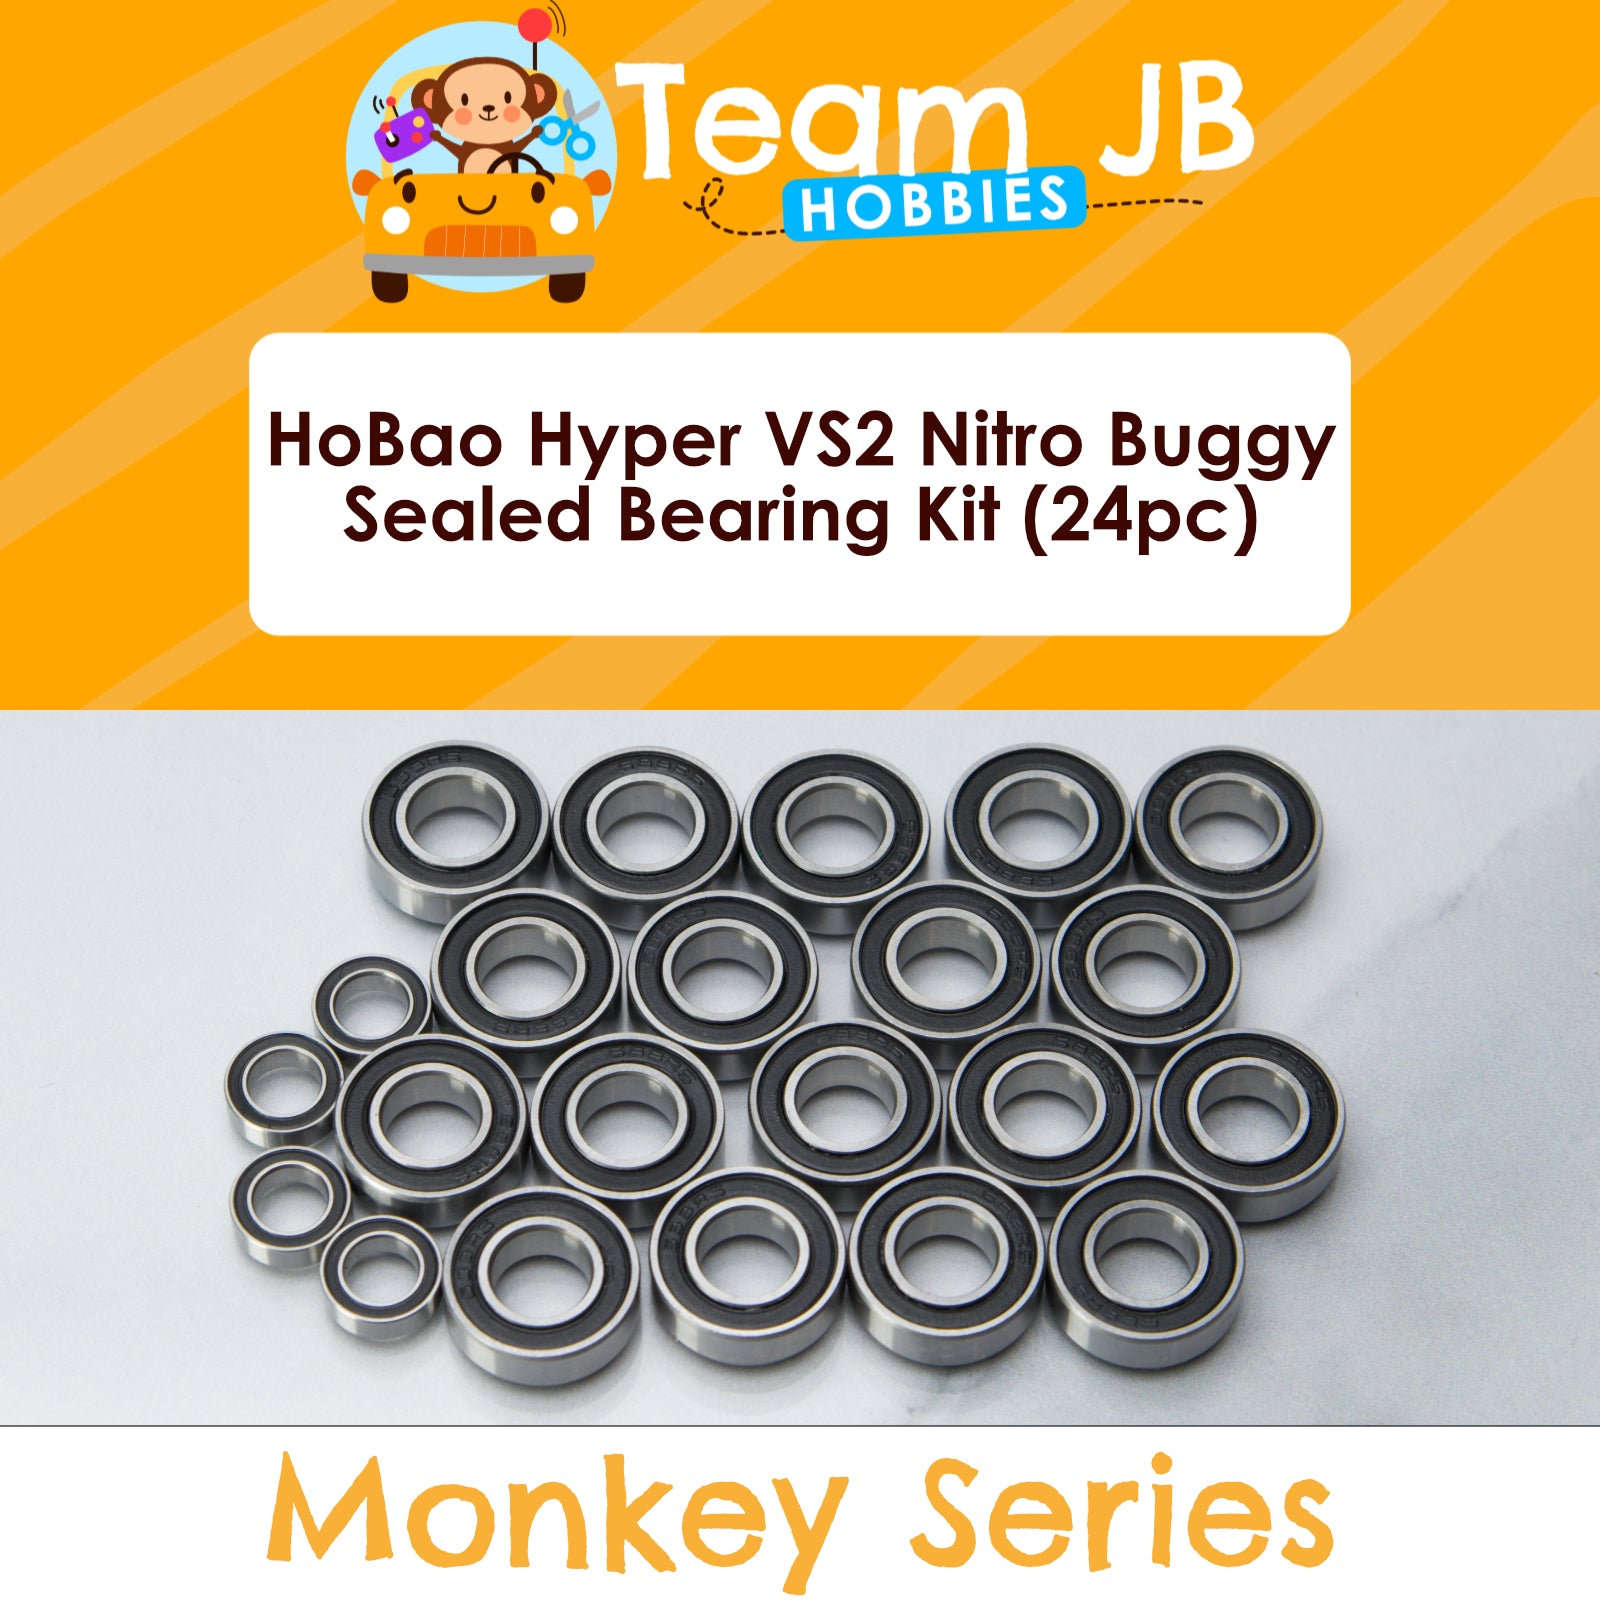 HoBao Hyper VS2 Nitro Buggy - Sealed Bearing Kit